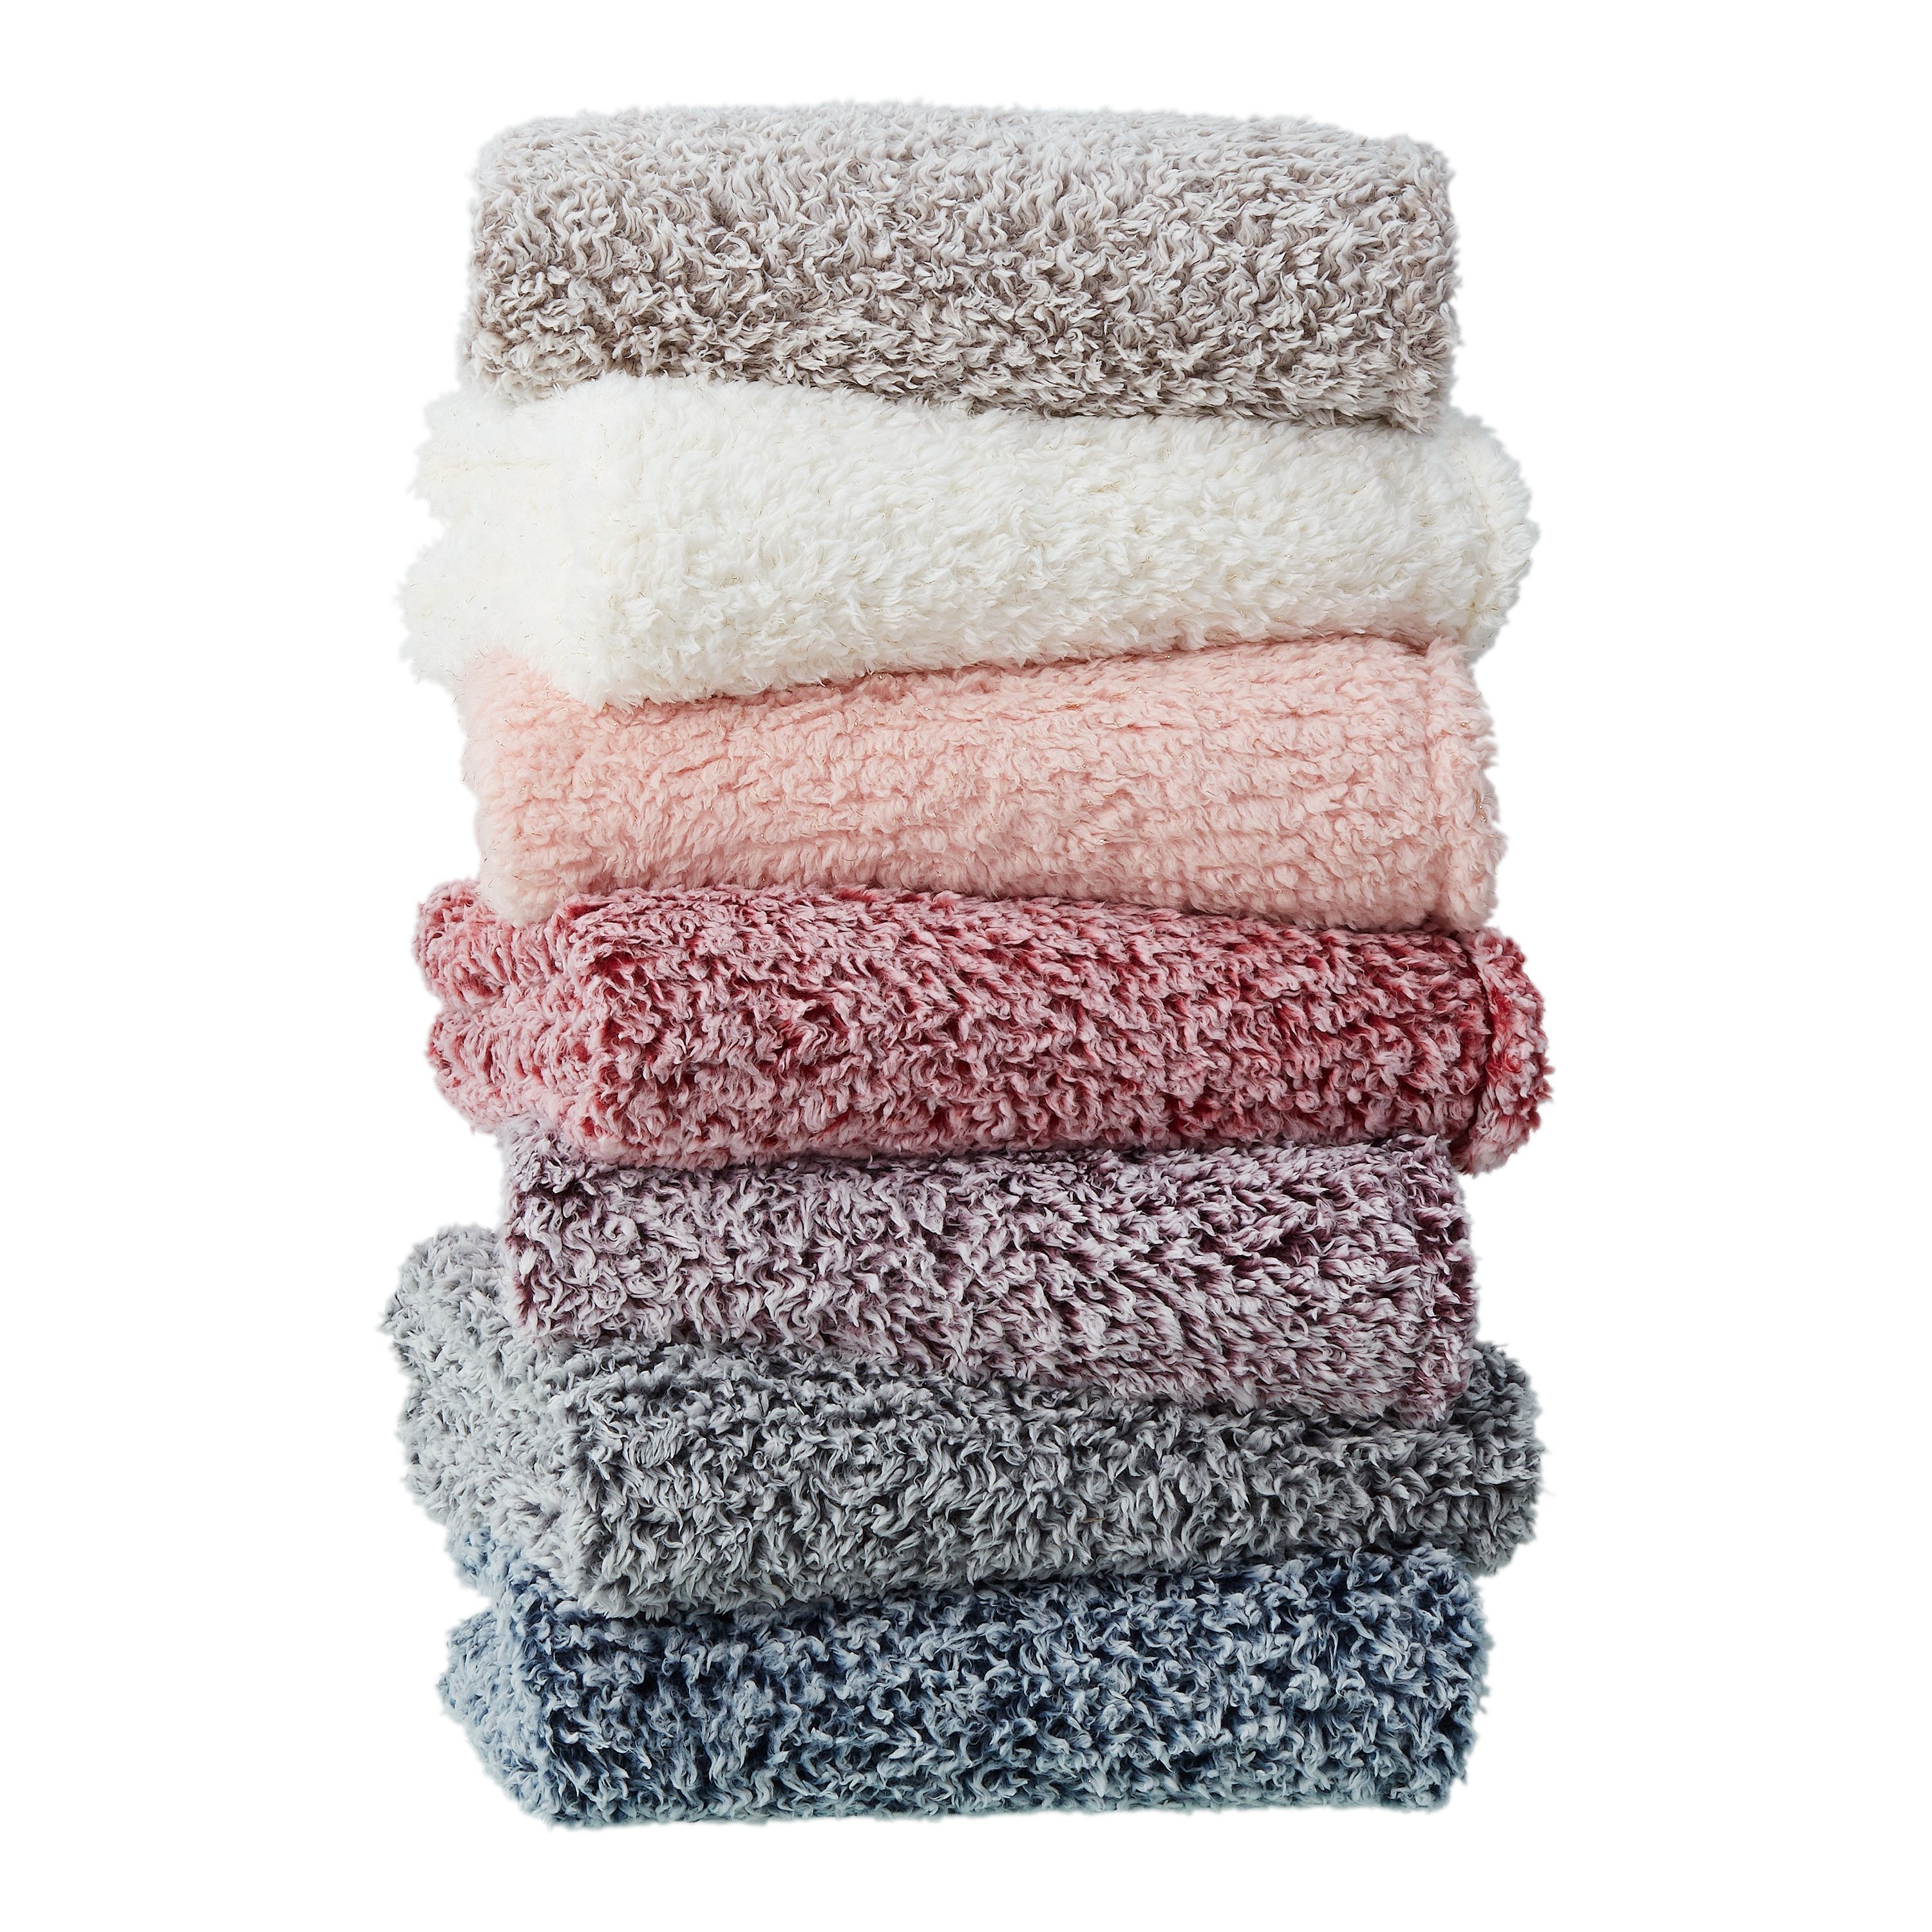 Microlight Plush Solid Fleece Throw Blanket Gray 50 X 60 Bedding Blankets Throws